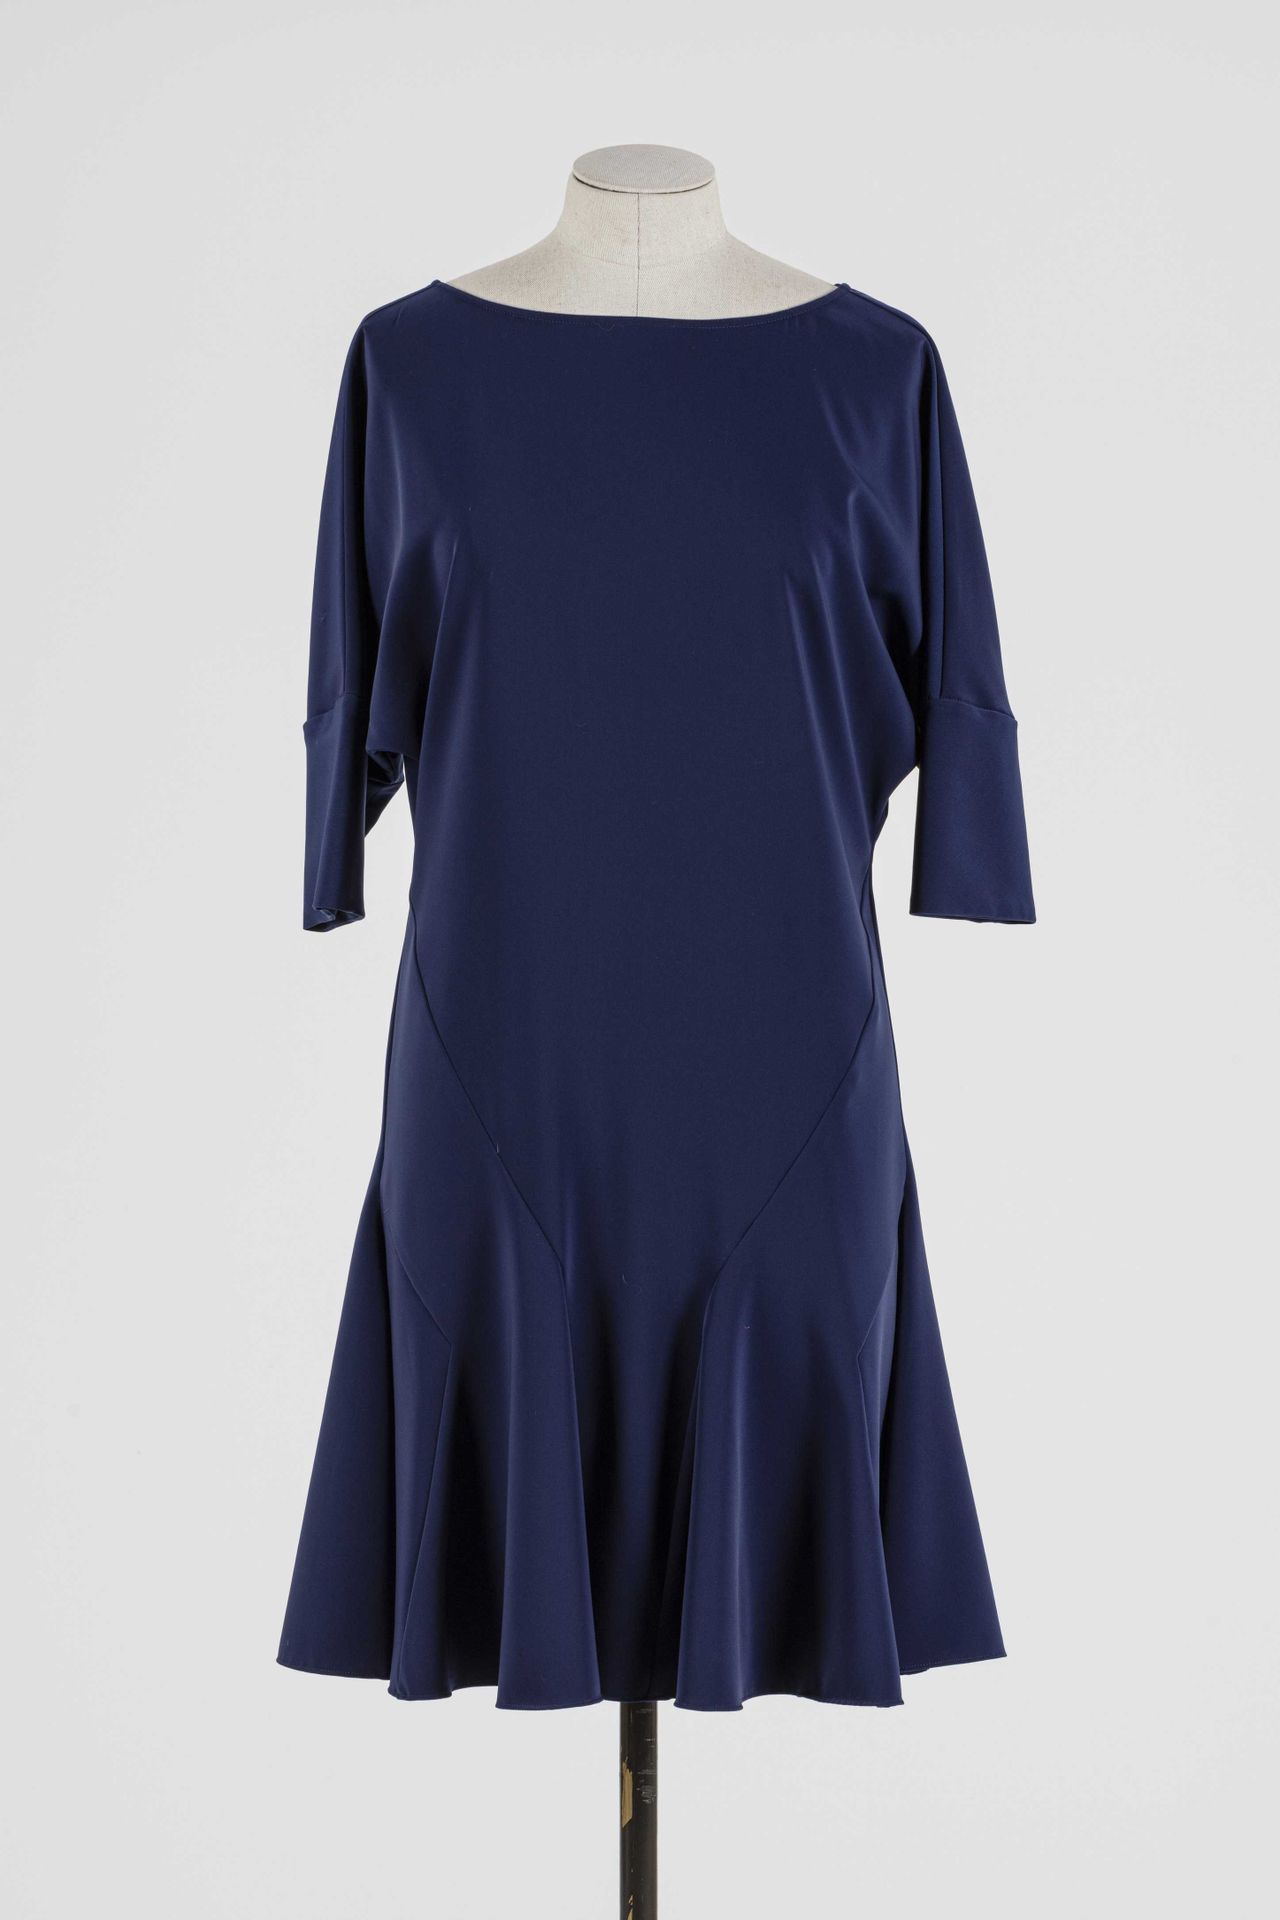 Null VERSACE : robe en polyester bleu , manches courtes.

T. 36